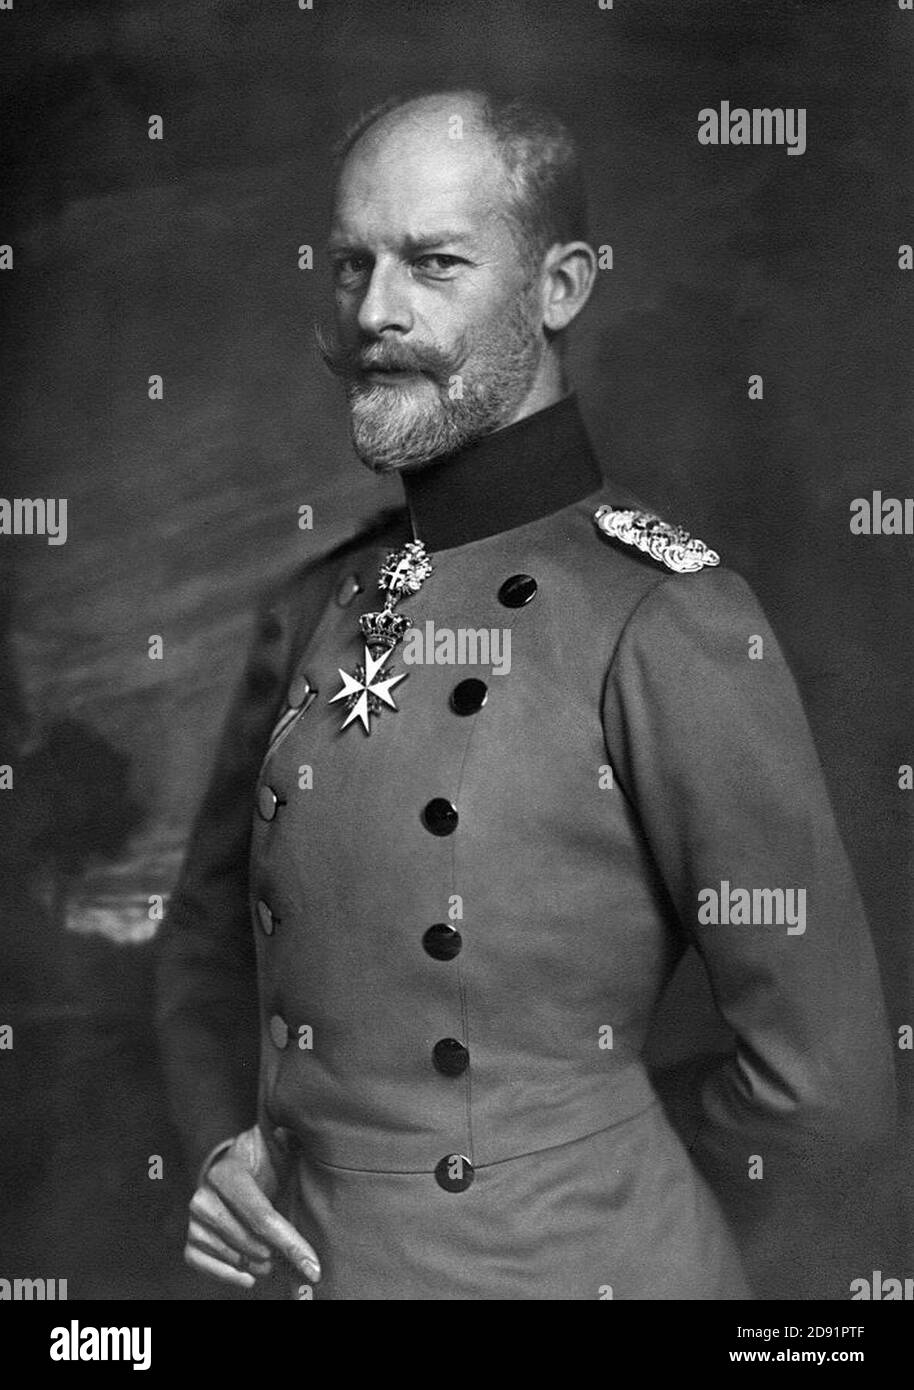 Karl Anton, Prince of Hohenzollern by Nicola Perscheid. Stock Photo